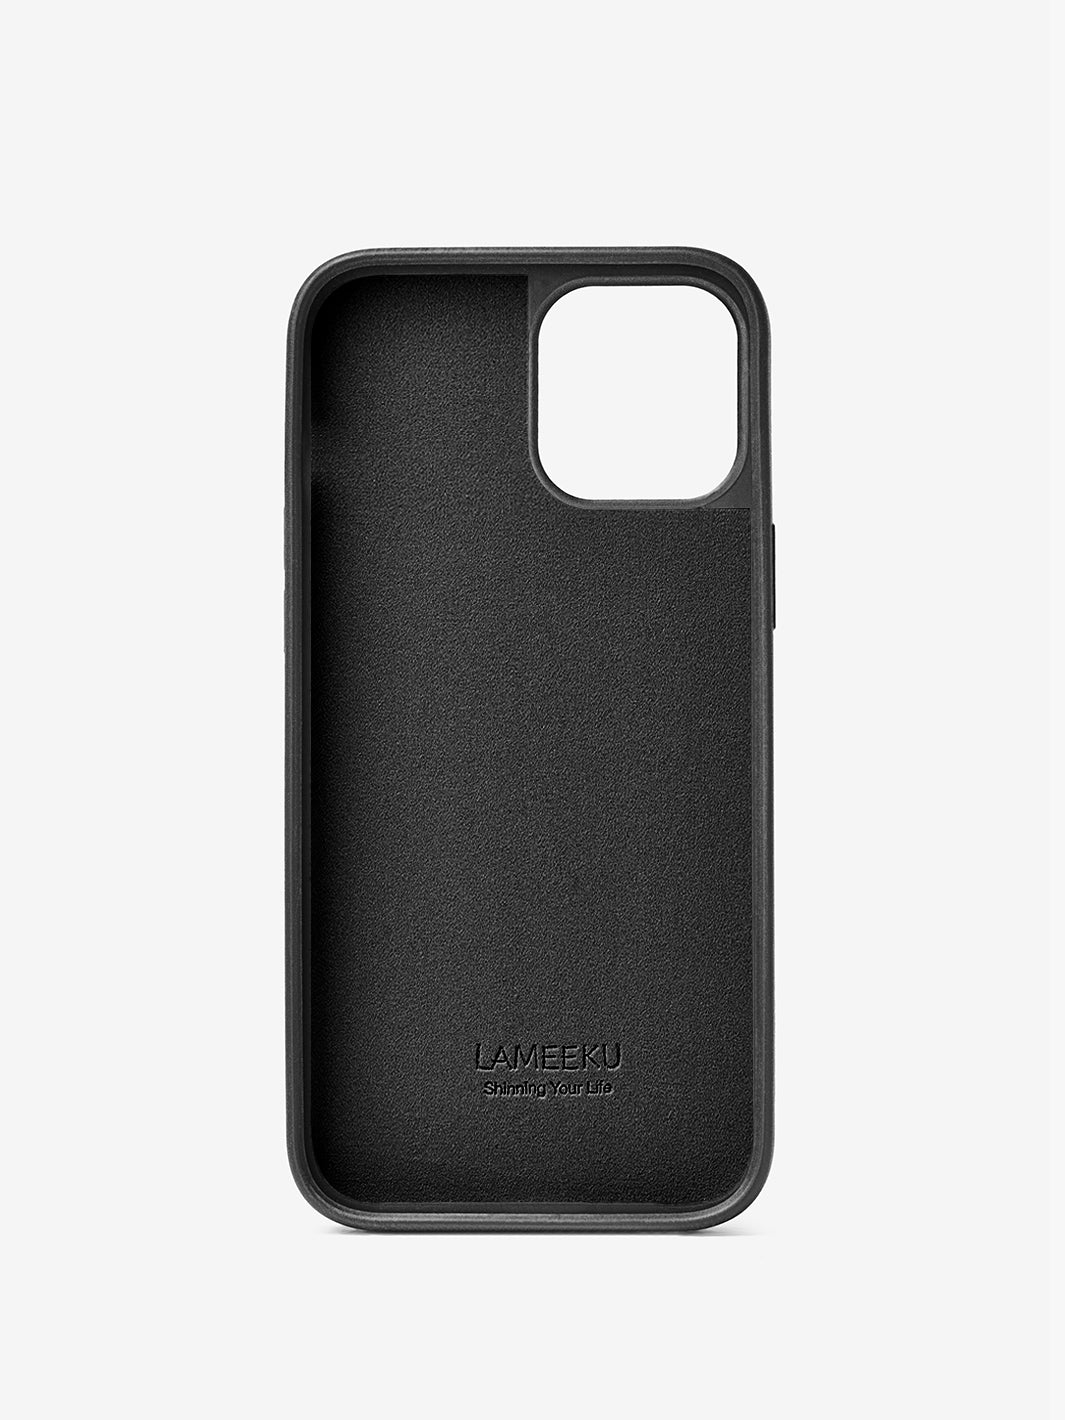 Custype phone case phone cover in black